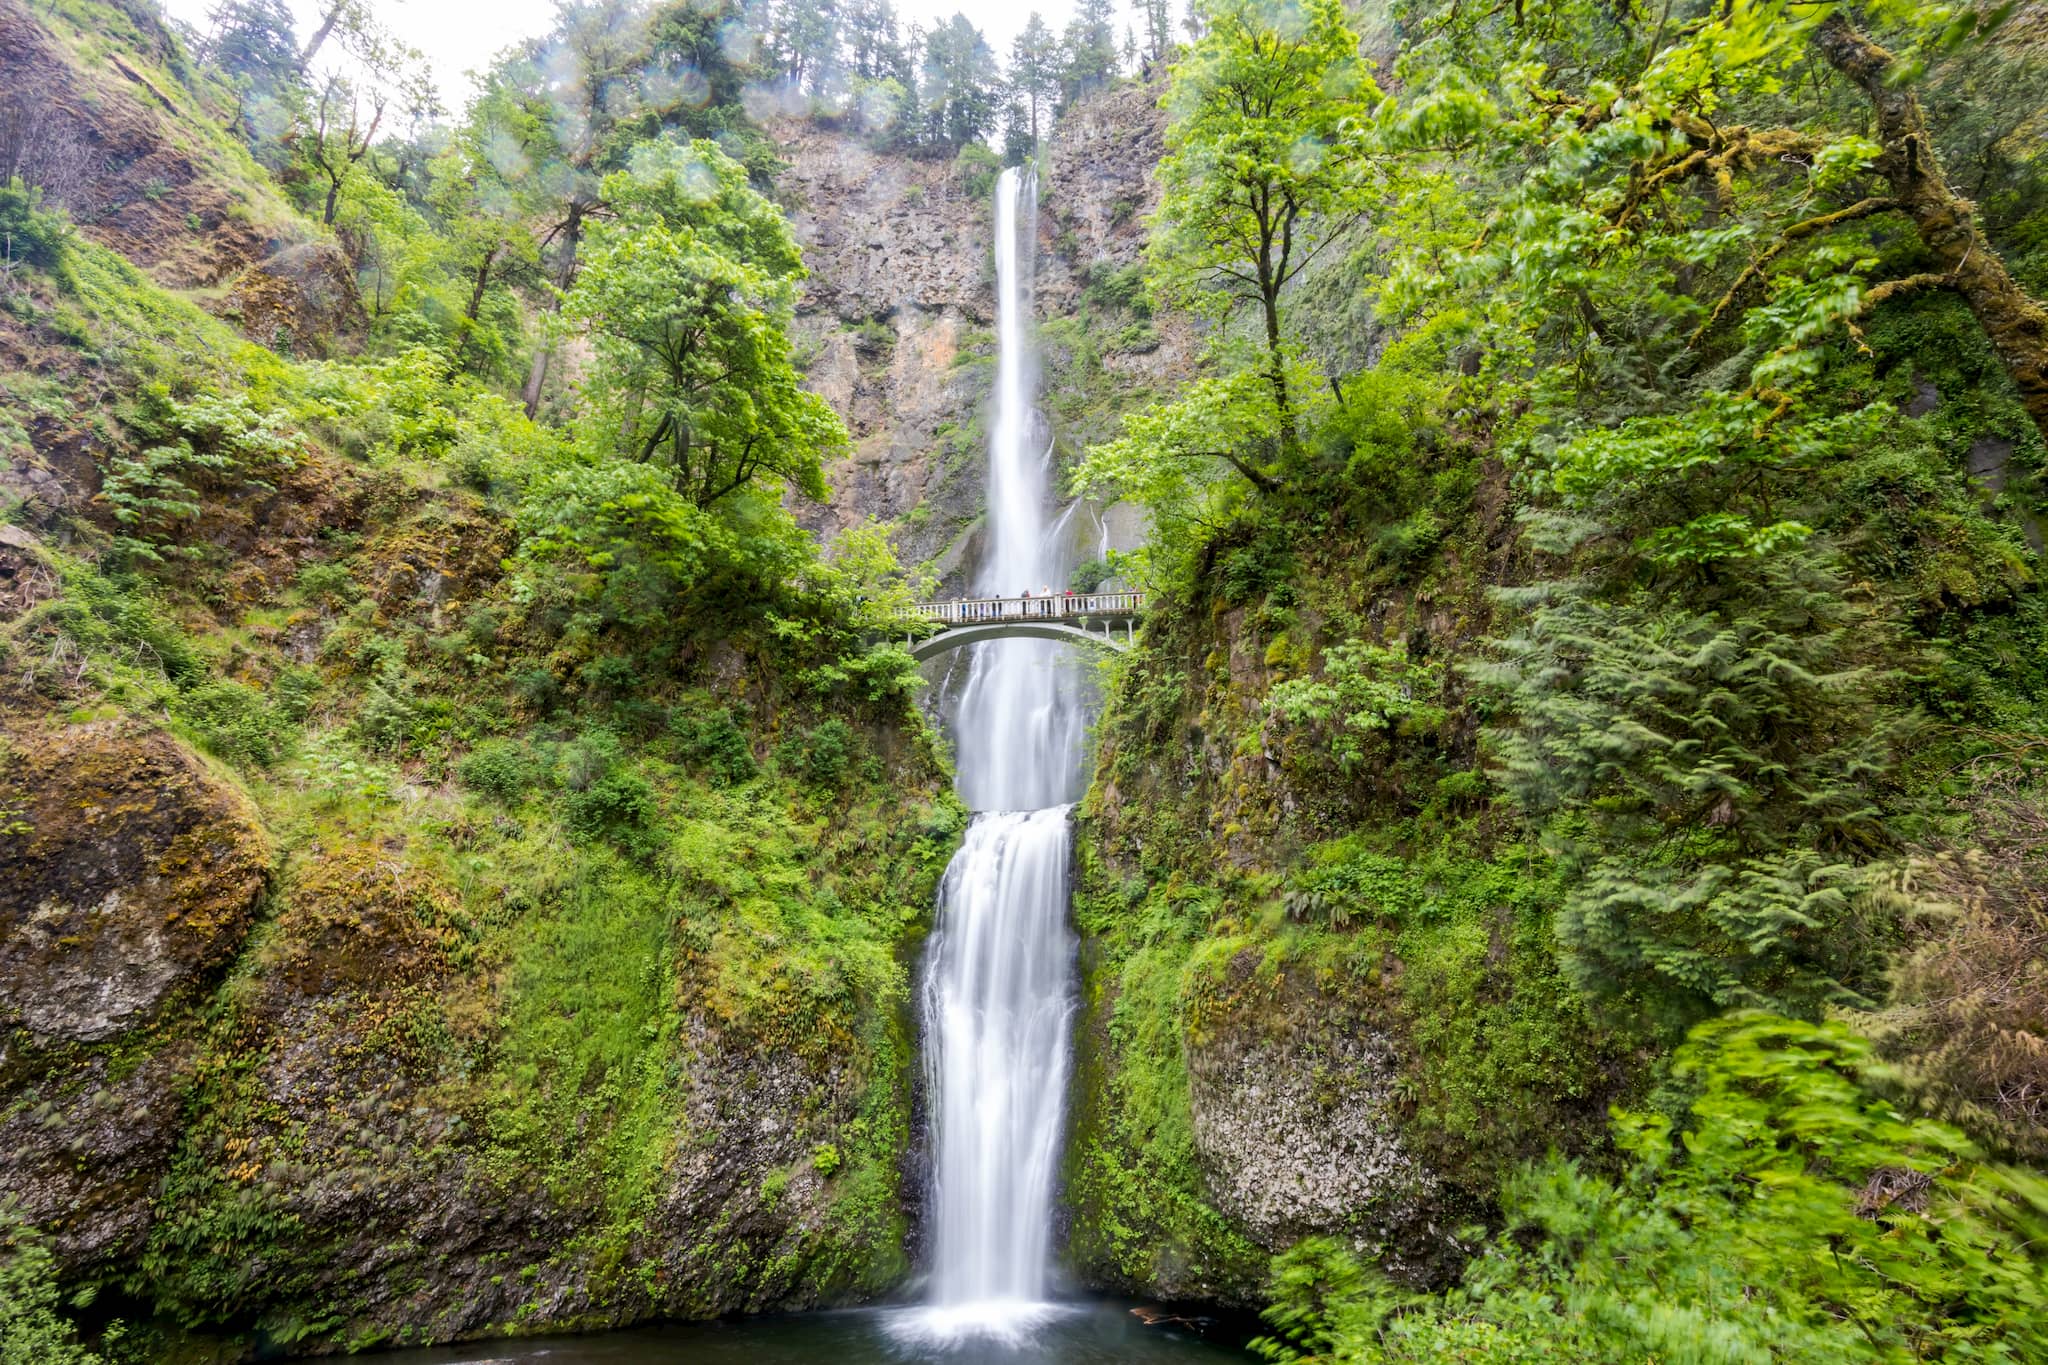 Multnomah Falls in the Gorge - Photo by Zoomdak